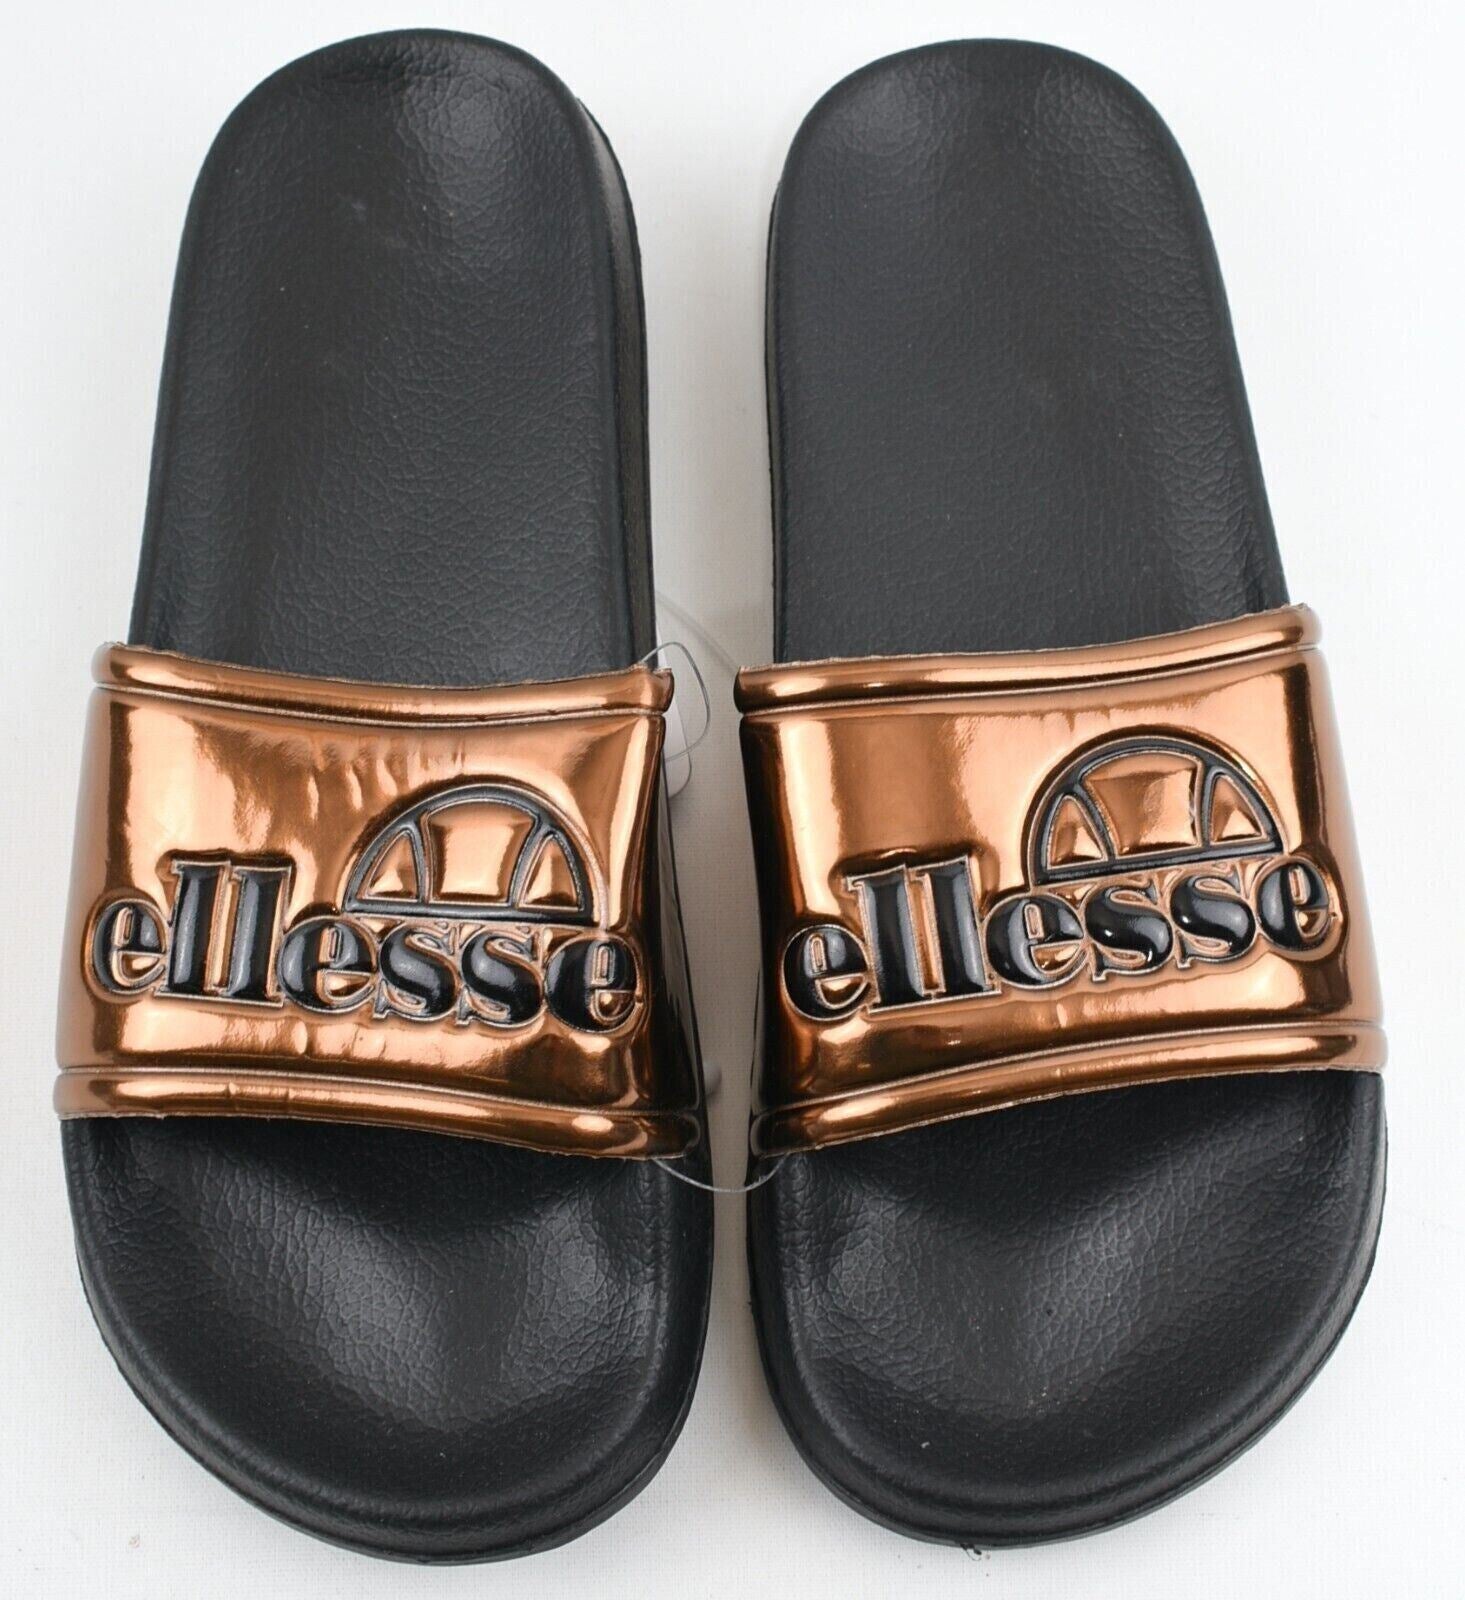 ELLESSE - GISELLE Womens Logo Sliders, Sandals, Bronze/Black, size UK 4 / EU 37